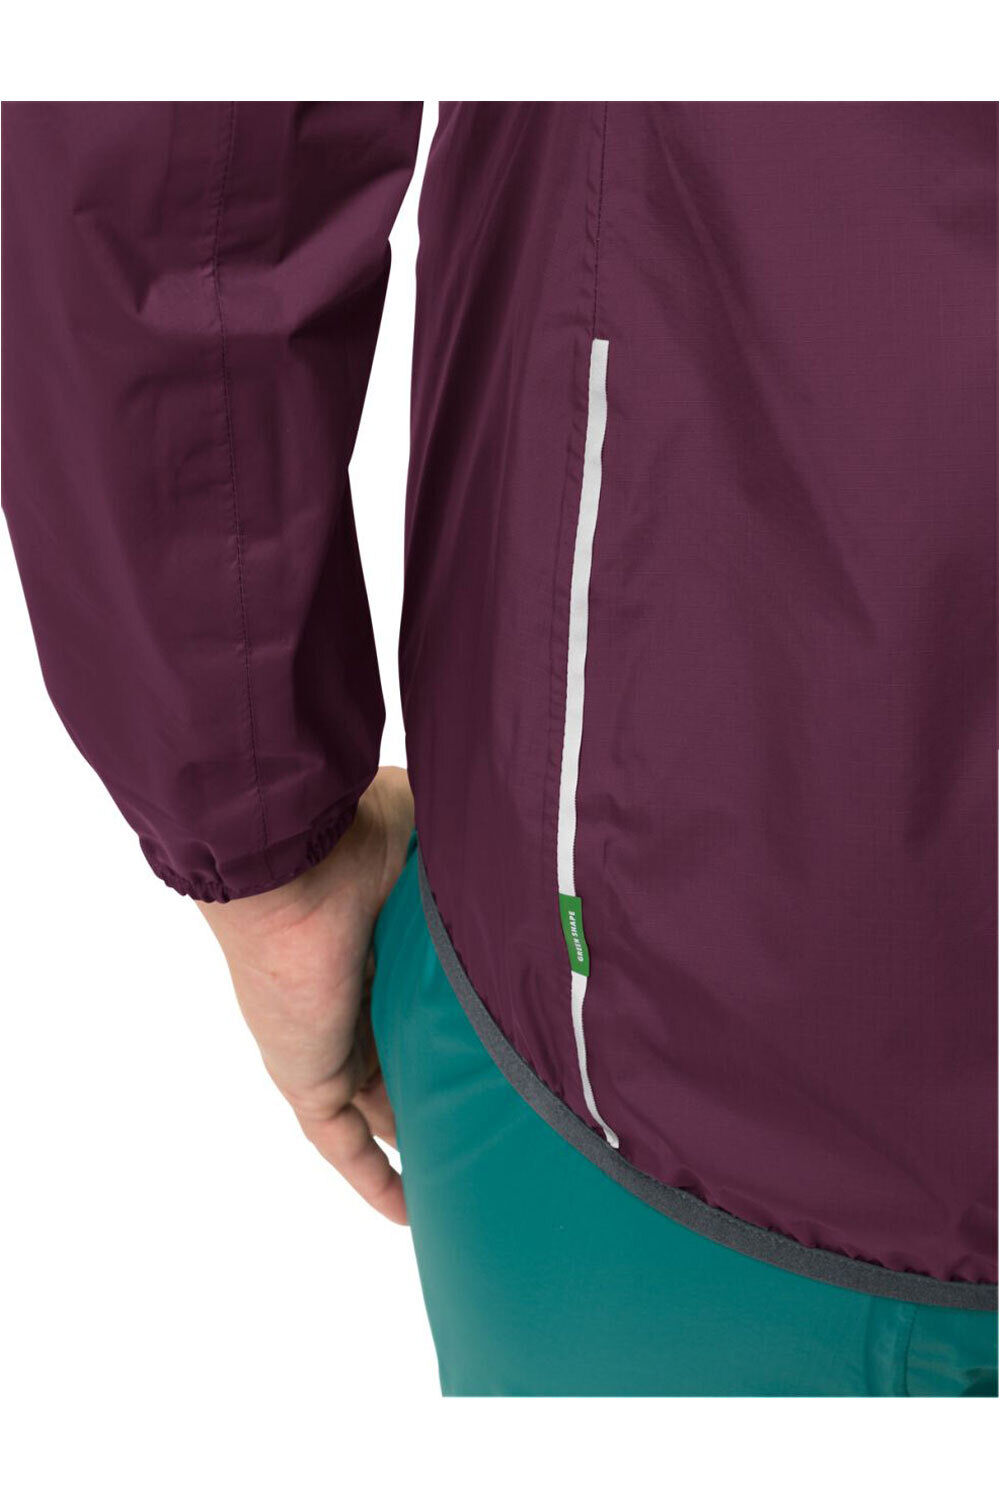 Vaude chaqueta impermeable ciclismo mujer Women's Drop Jacket III 03